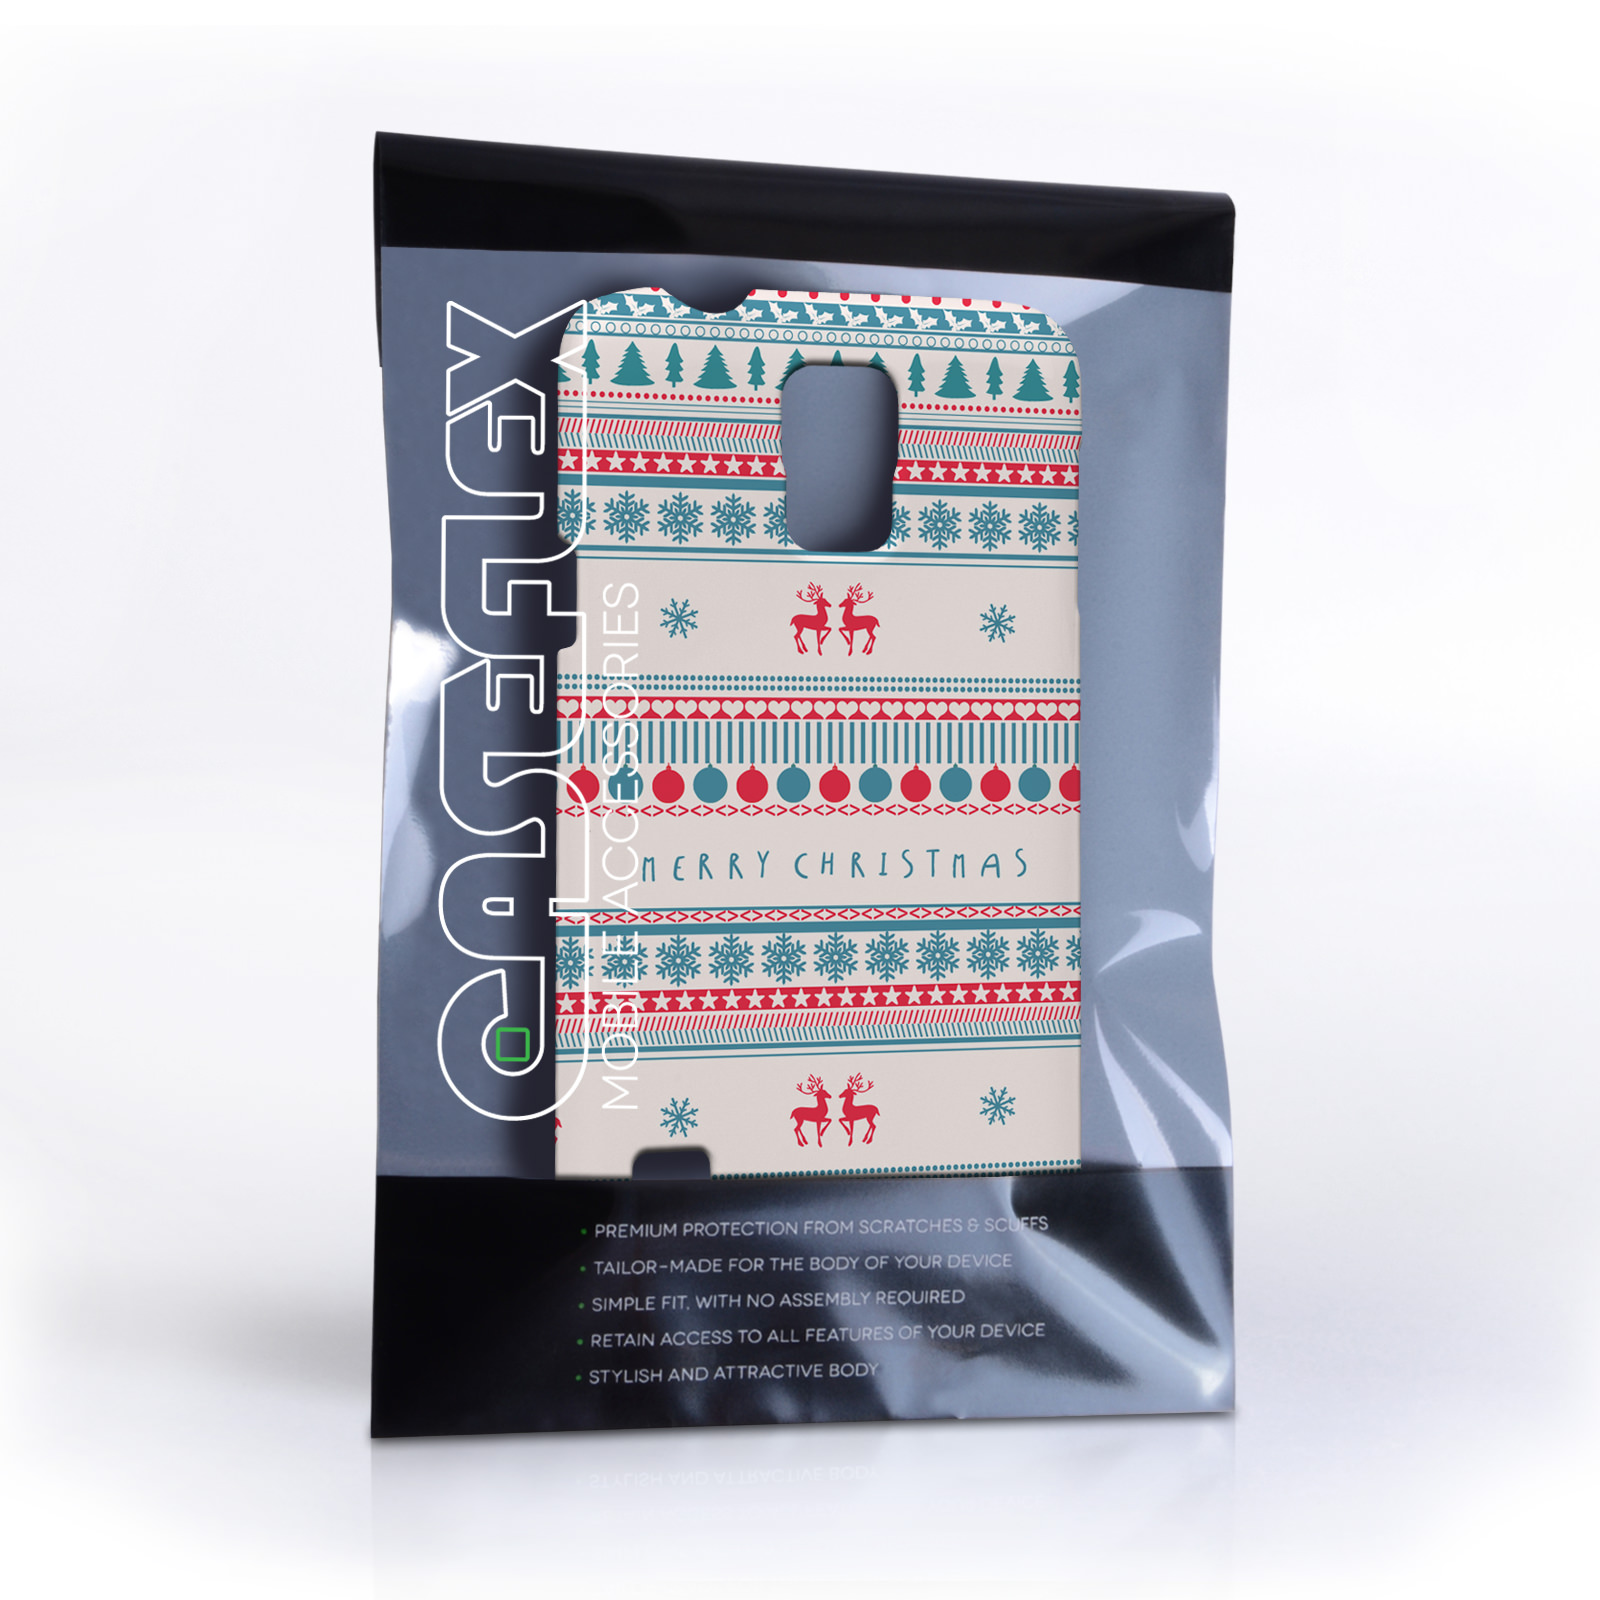 Caseflex Samsung Galaxy S5 Merry Christmas Reindeer Snowflake Pattern Hard Case